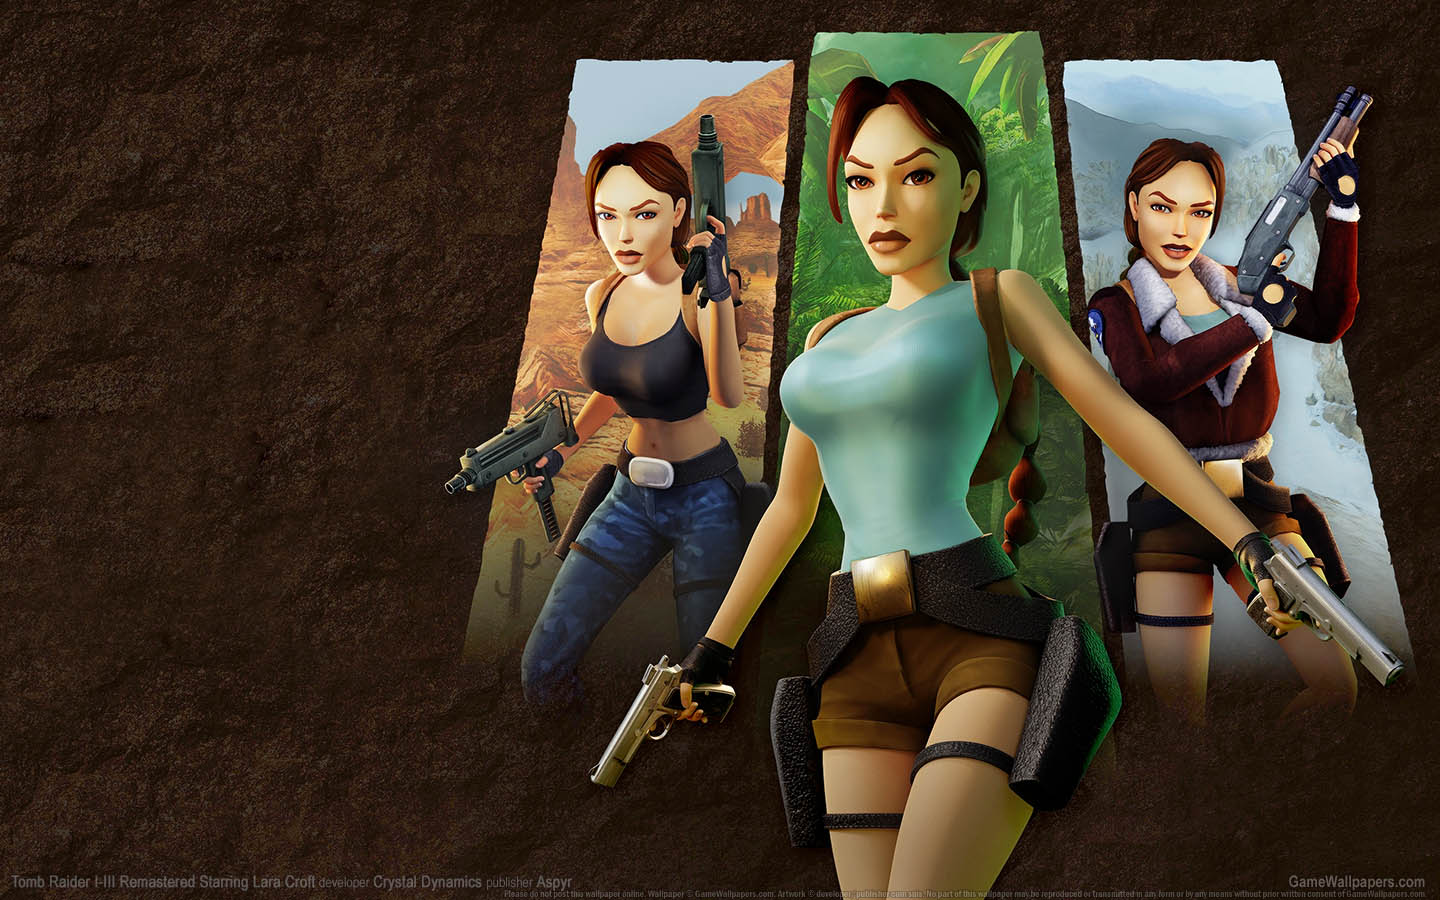 Tomb Raider I-III Remastered Starring Lara Croft wallpaper 01 1440x900